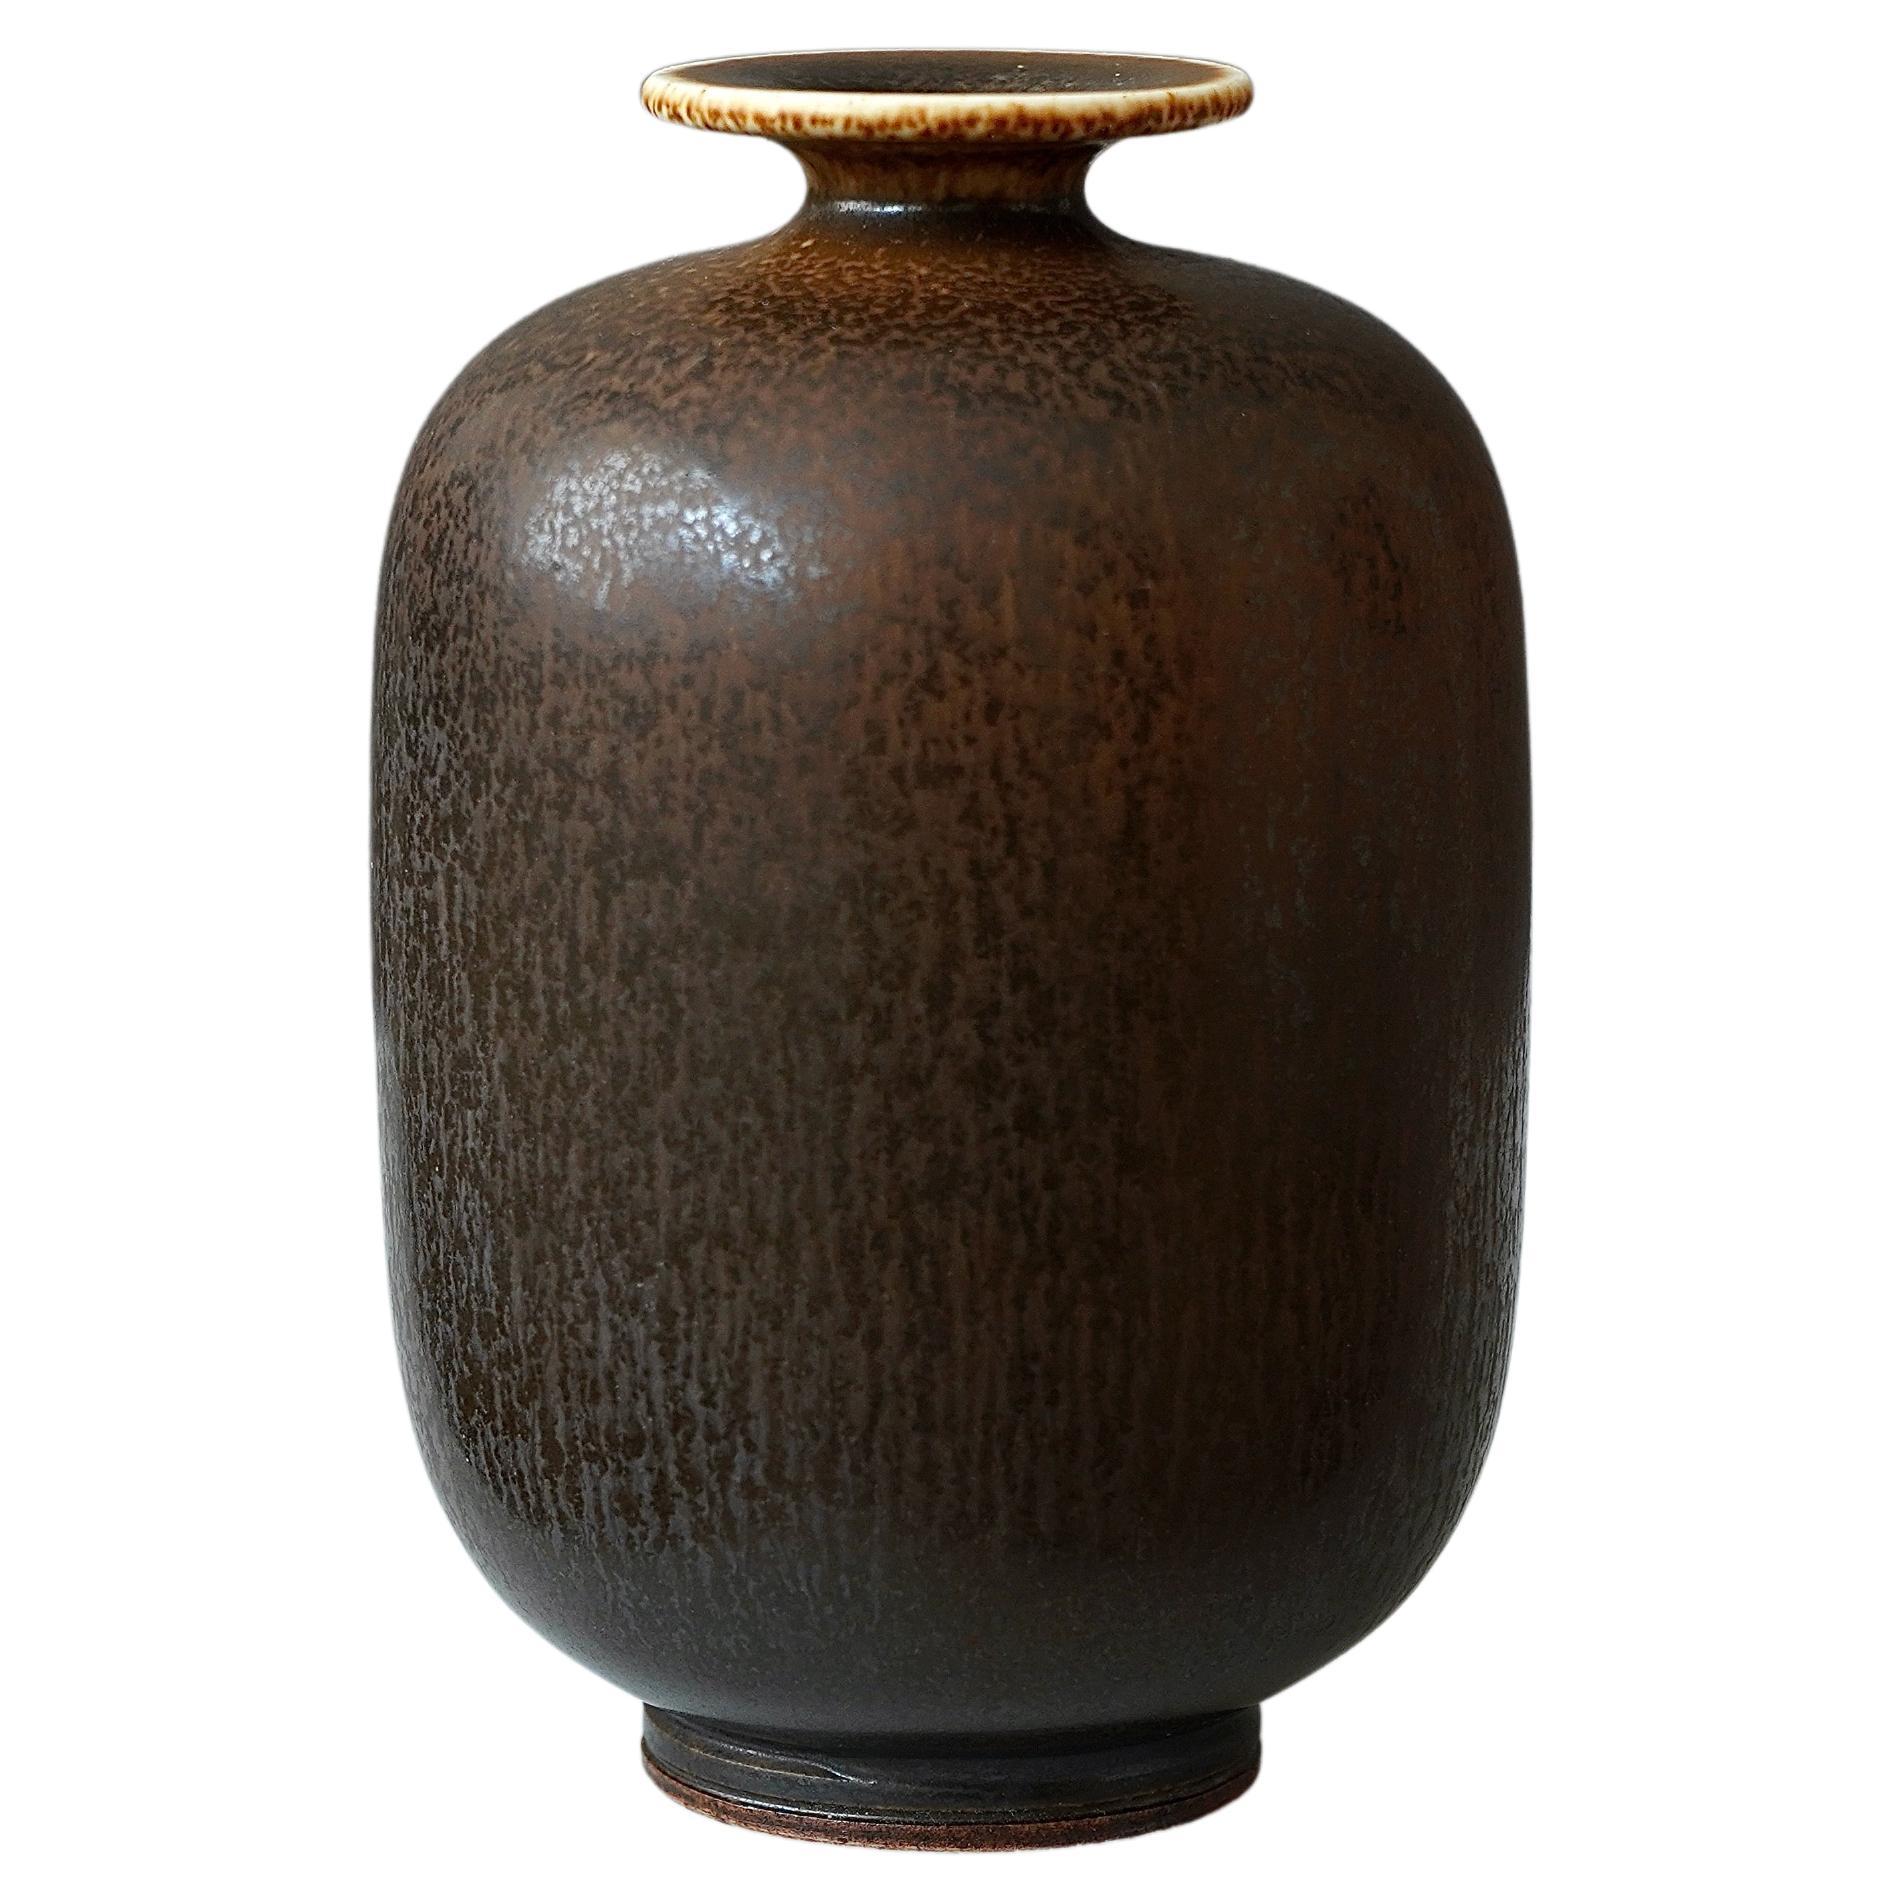 Stoneware Vase by Berndt Friberg for Gustavsberg, Sweden, 1965